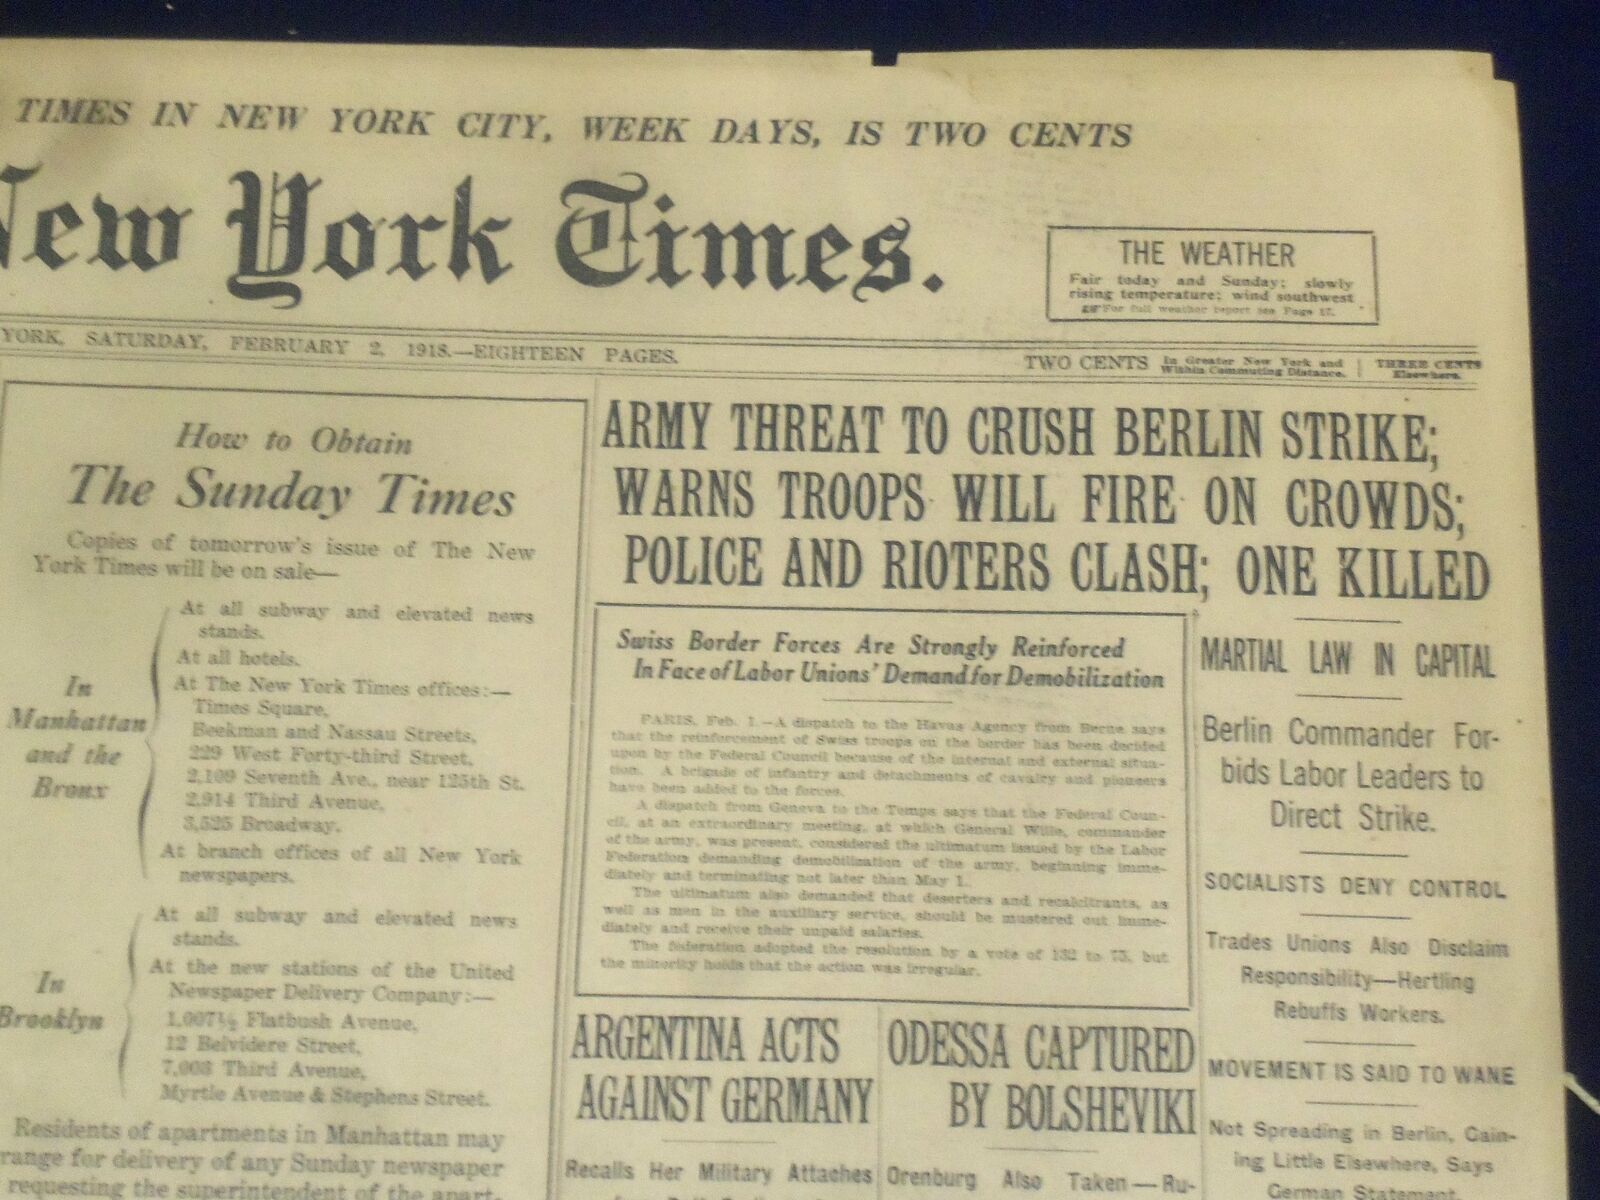 1918 FEBRUARY 2 NEW YORK TIMES - ARMY THREAT TO CRUSH BERLIN STRIKE - NT 8228